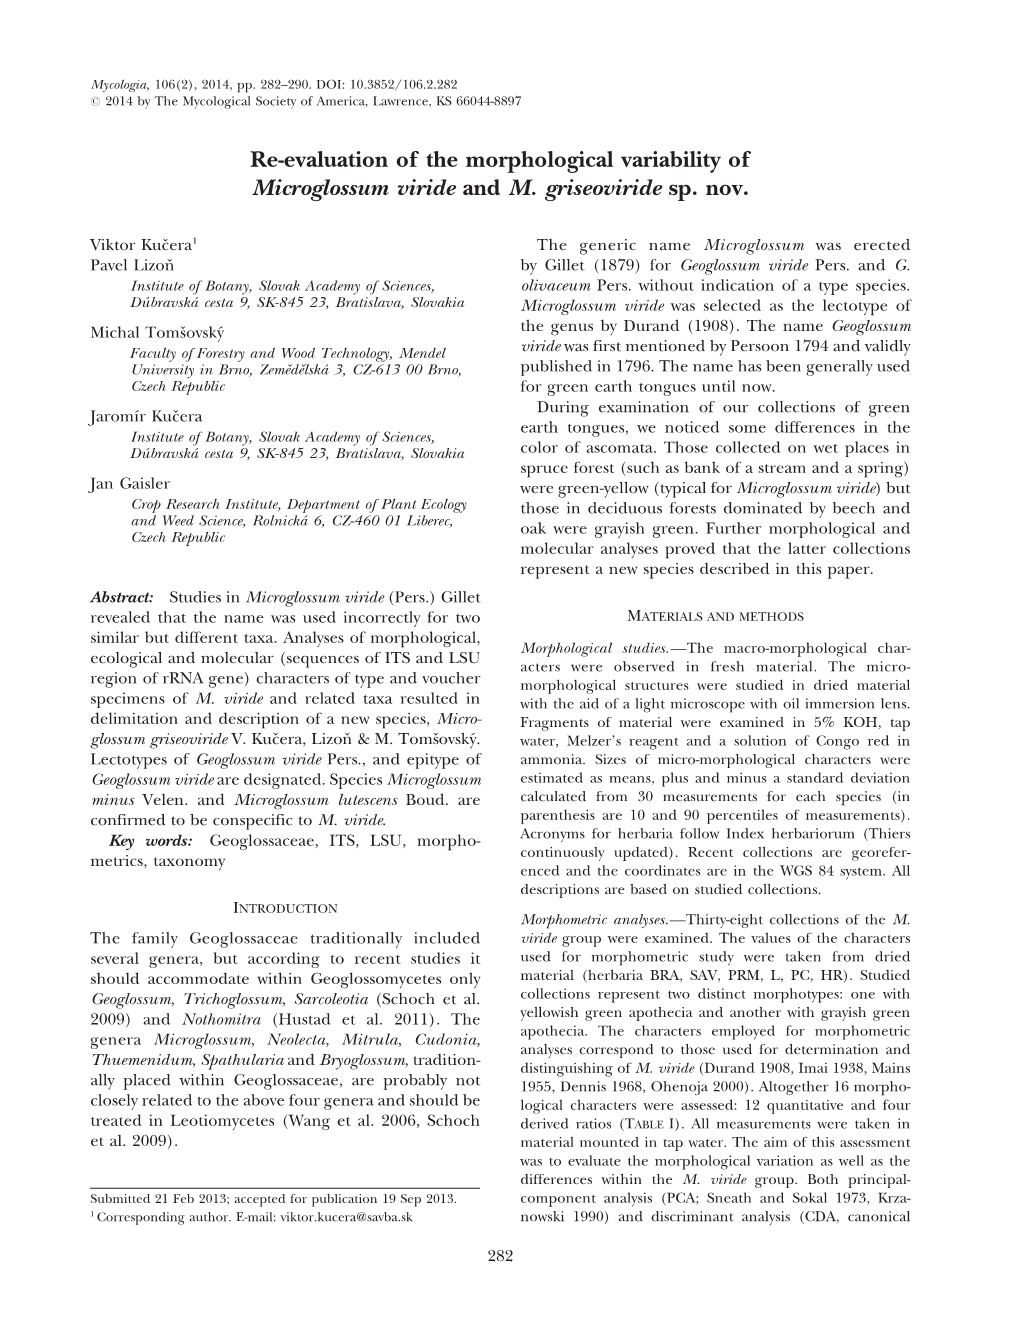 Re-Evaluation of the Morphological Variability of Microglossum Viride and M. Griseoviride Sp. Nov